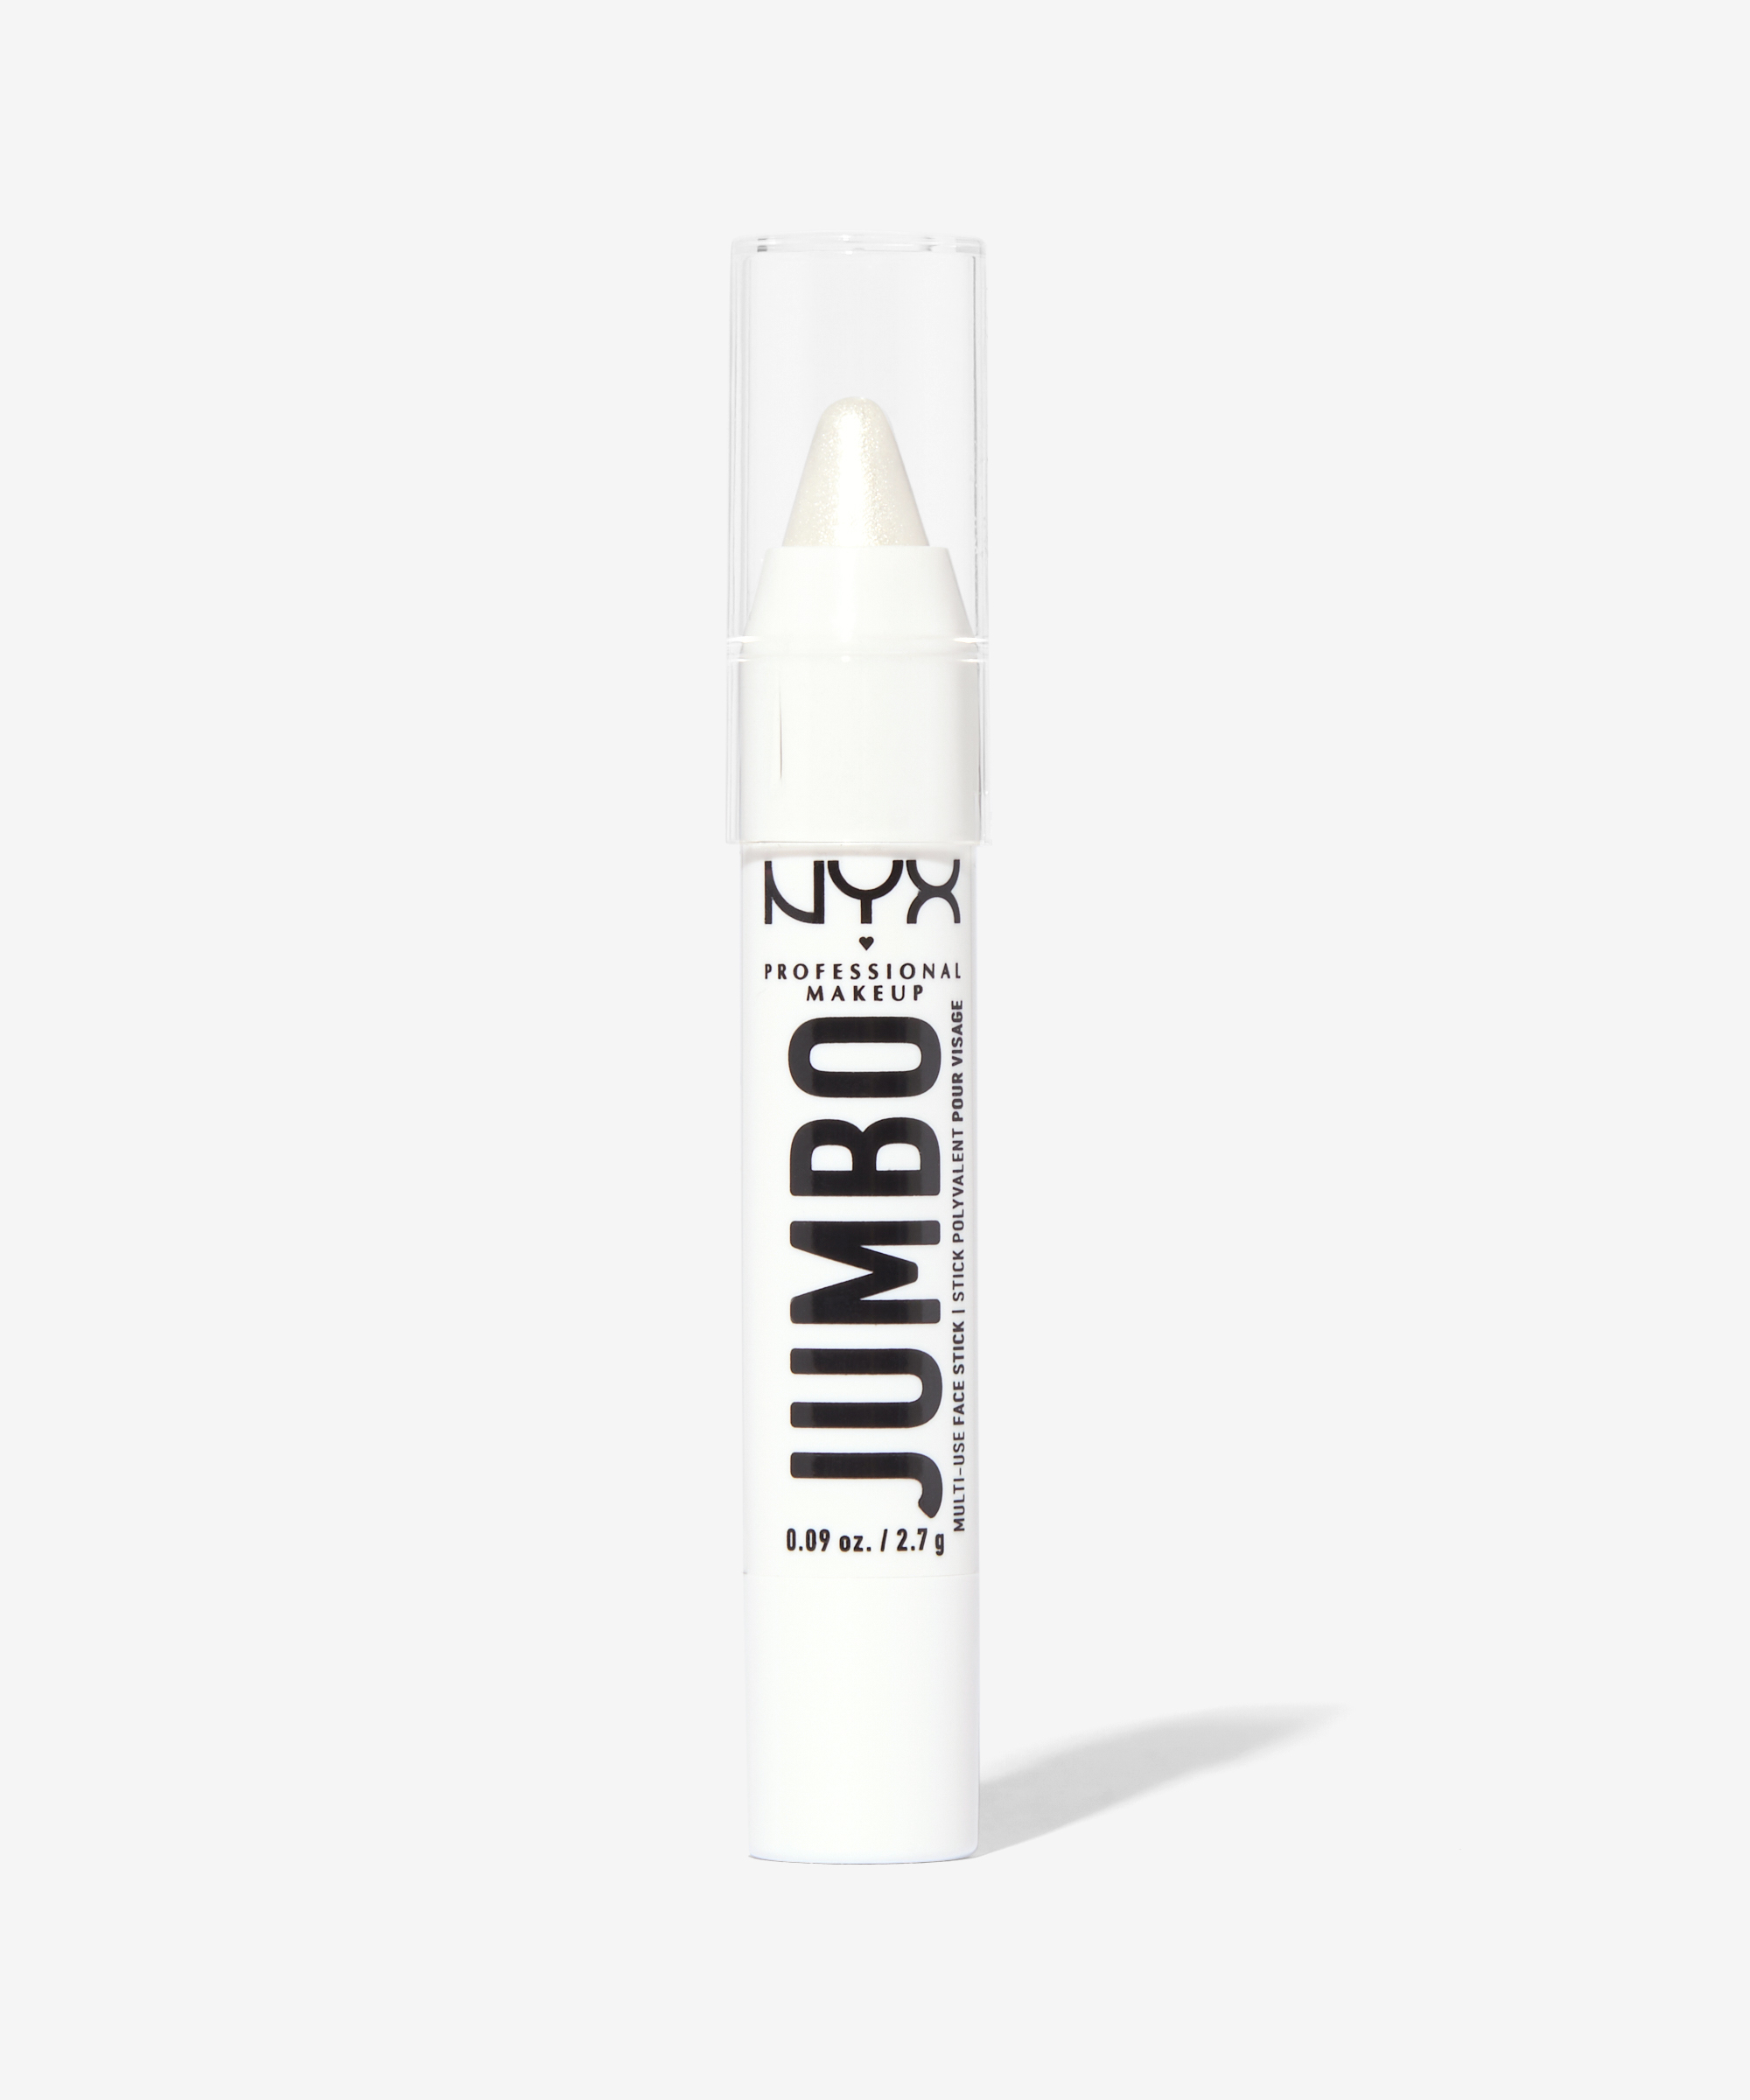 NYX PROFESSIONAL MAKEUP, Jumbo Multi-Use Face Stick, Highlighter, Pearl  Finish, Vegan Formula - Blueberry Muffin, Ultra-smooth, pearl finish stick